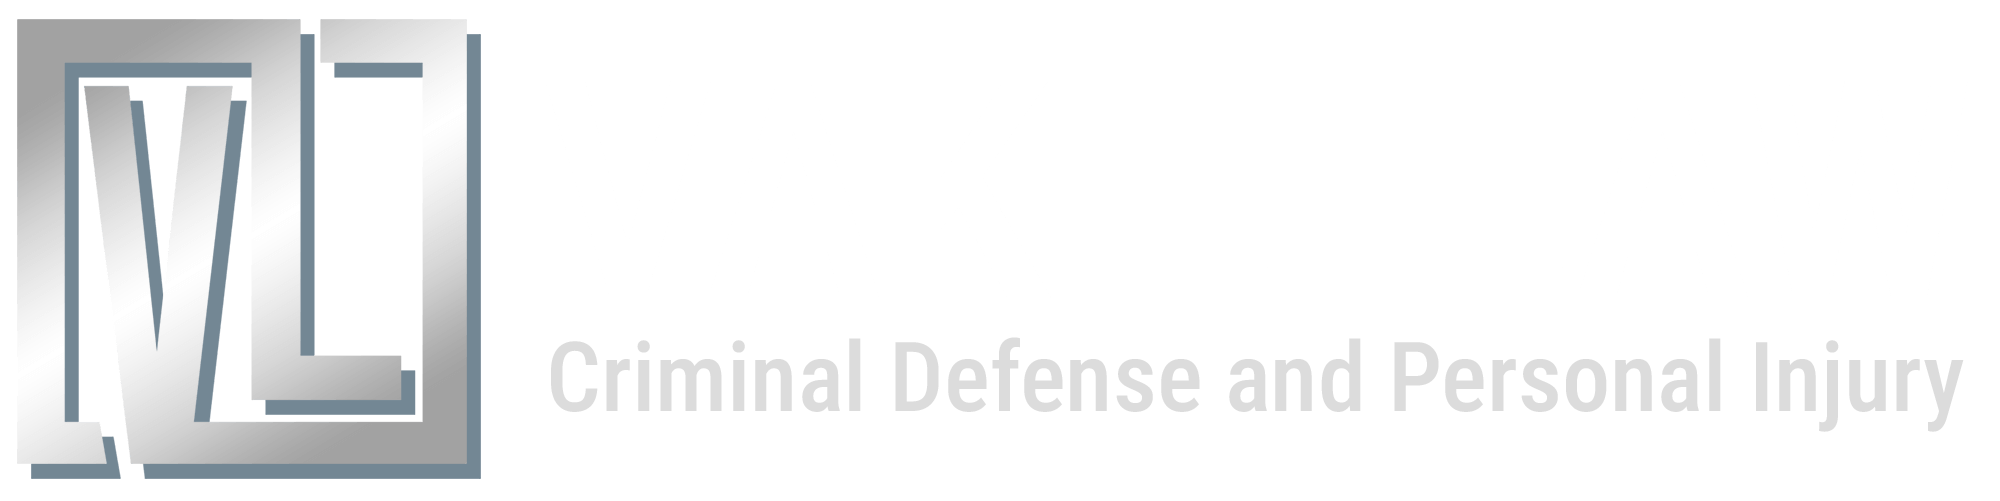 Vakili Law White Full Logo